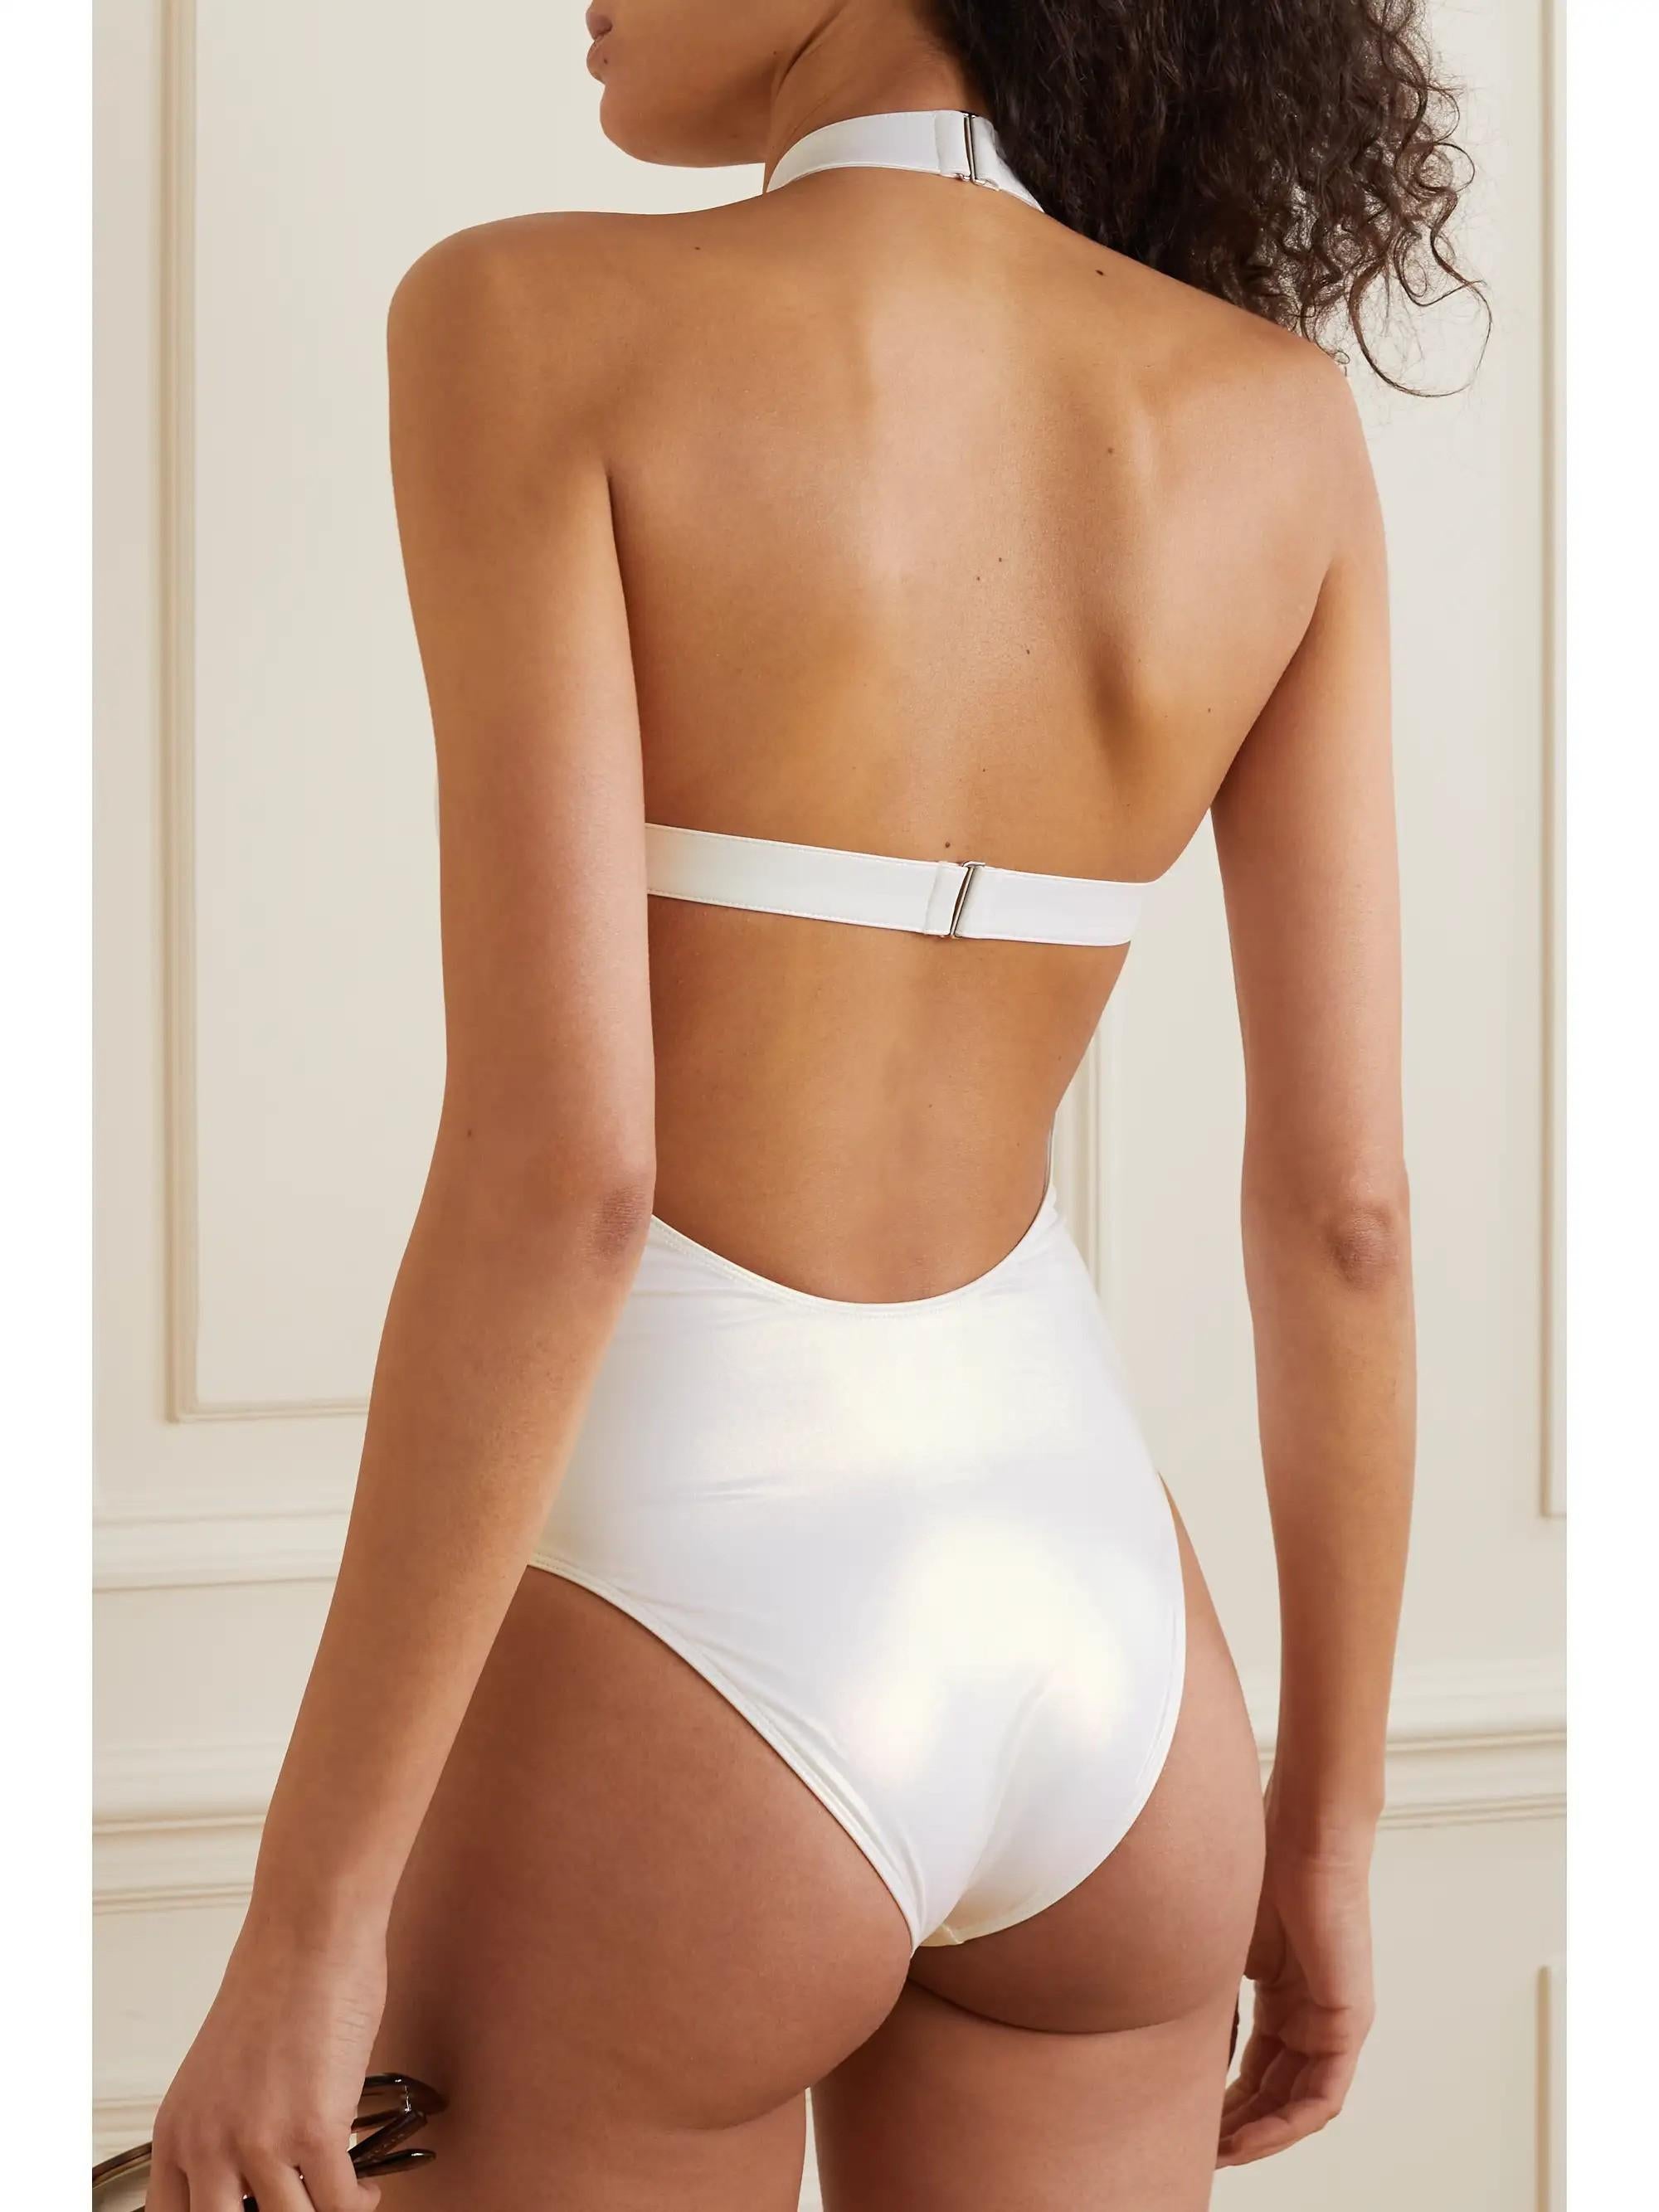 authentic ALAIA iridescent white HALTER ONE PIECE Swimsuit Swimwear 36 XS 4